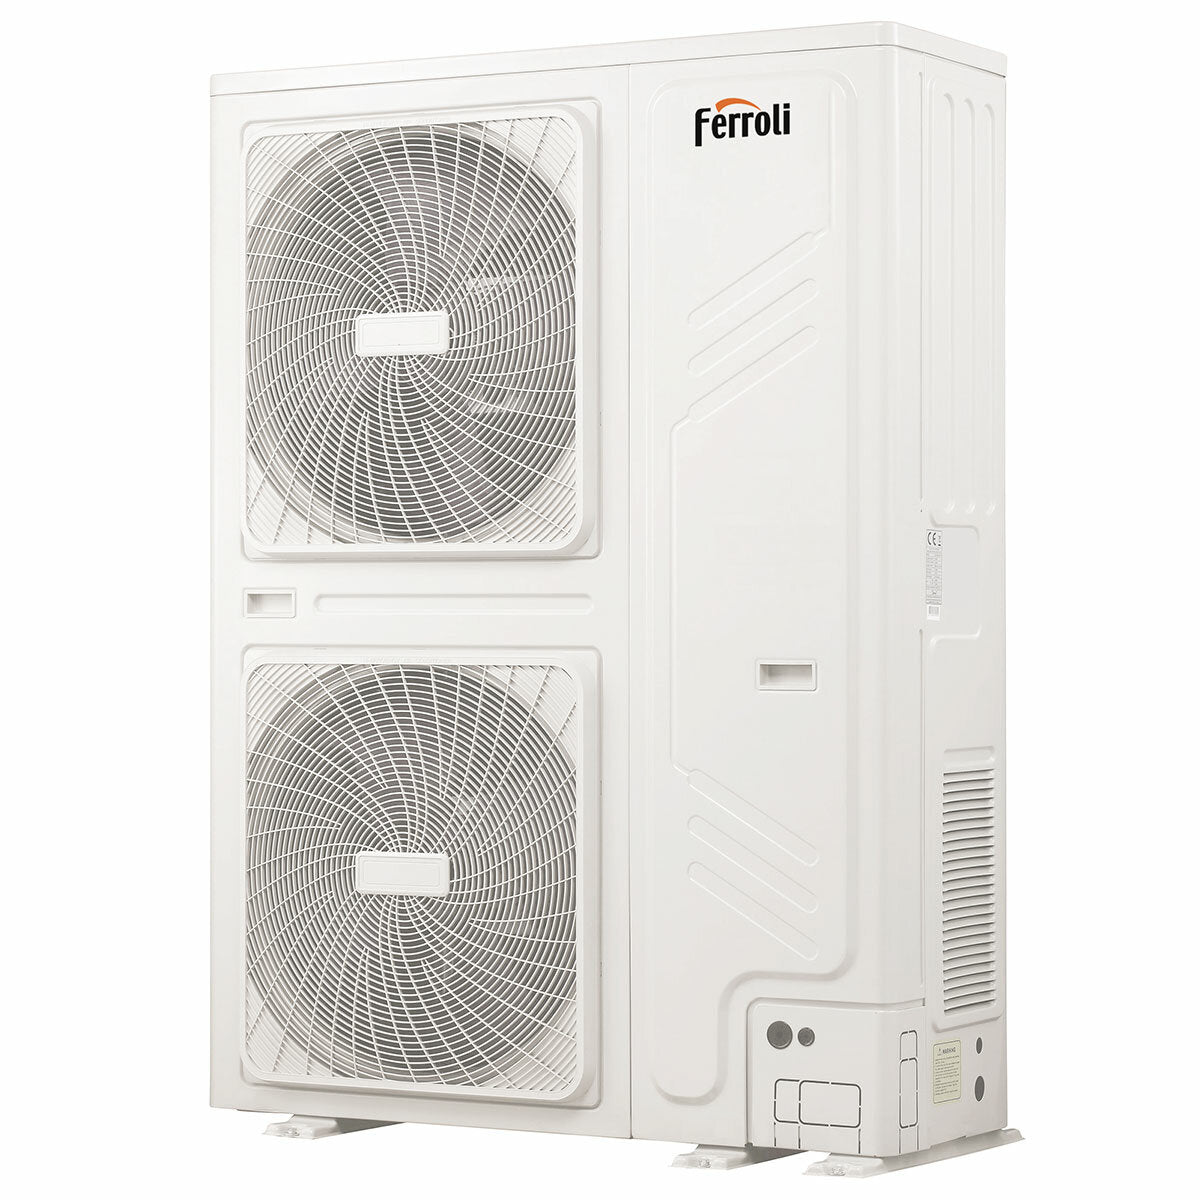 Ferroli Omnia M 3.2 22 kW Monobloc Three-Phase Inverter R32 A++ air-water heat pump